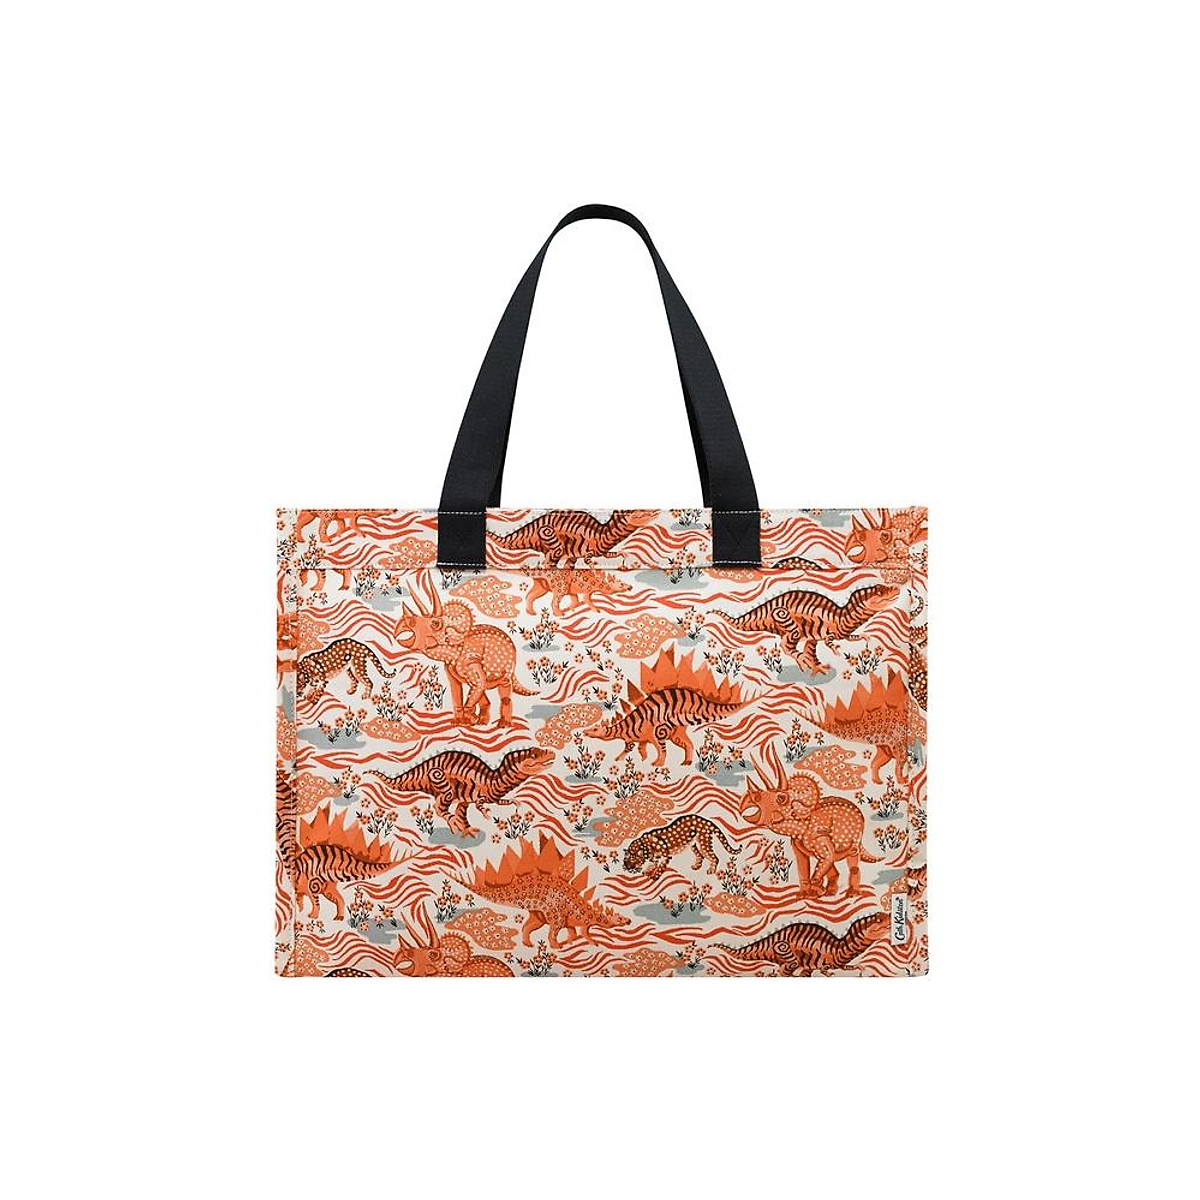 Cath Kidston Pink Leather Grab Shoulder Bag: Amazon.co.uk: Fashion